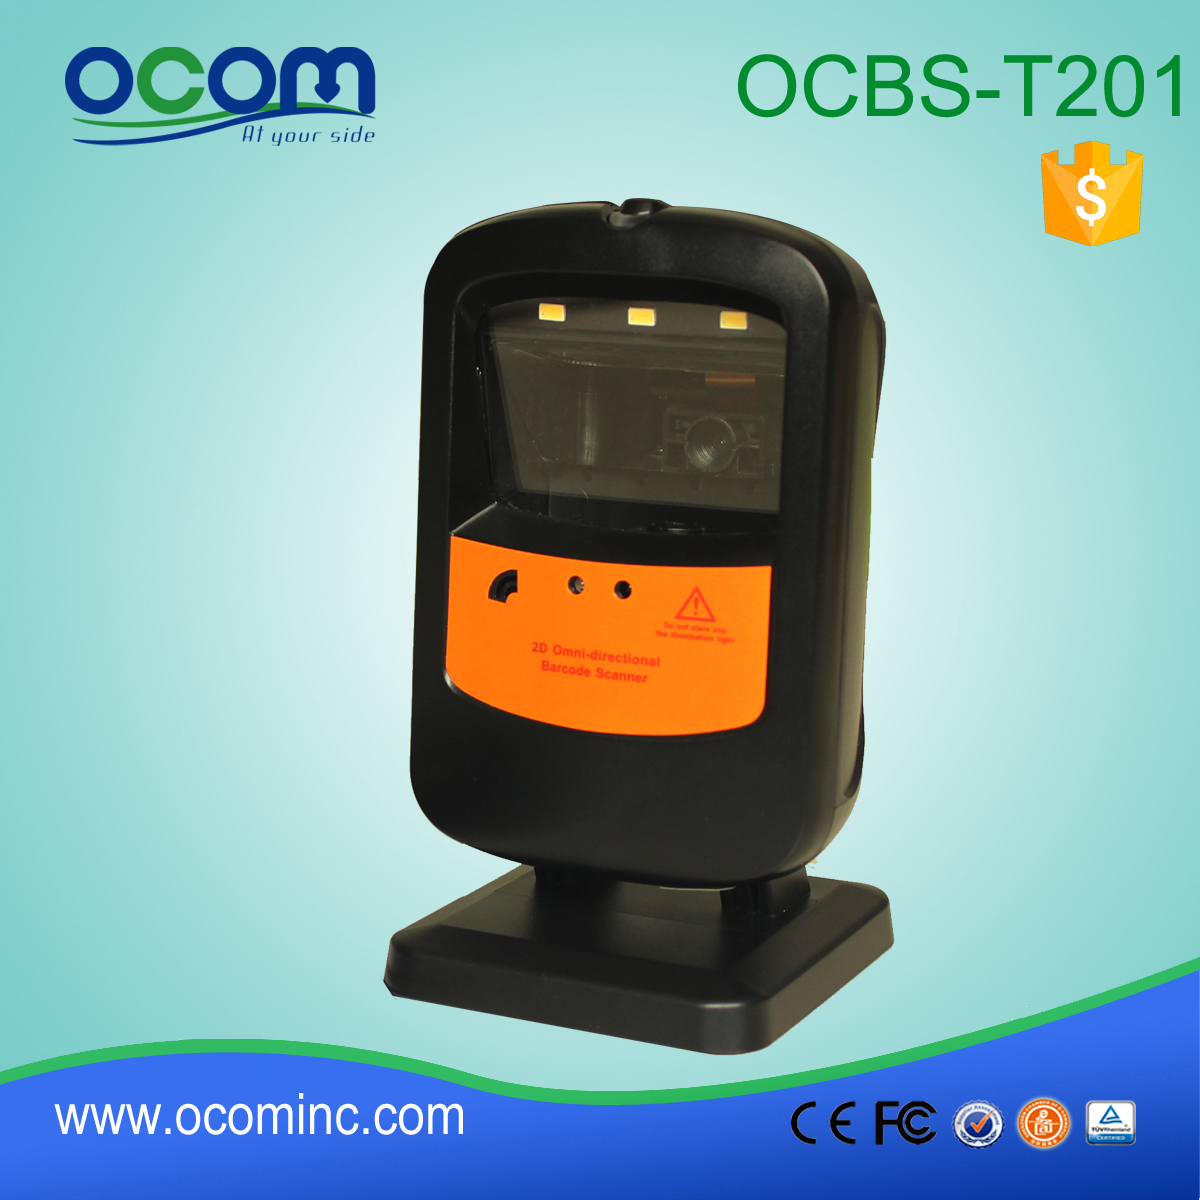 OCBS-T201: QR scanner de codes barres arme à feu, les fournisseurs de lecteur de codes barres